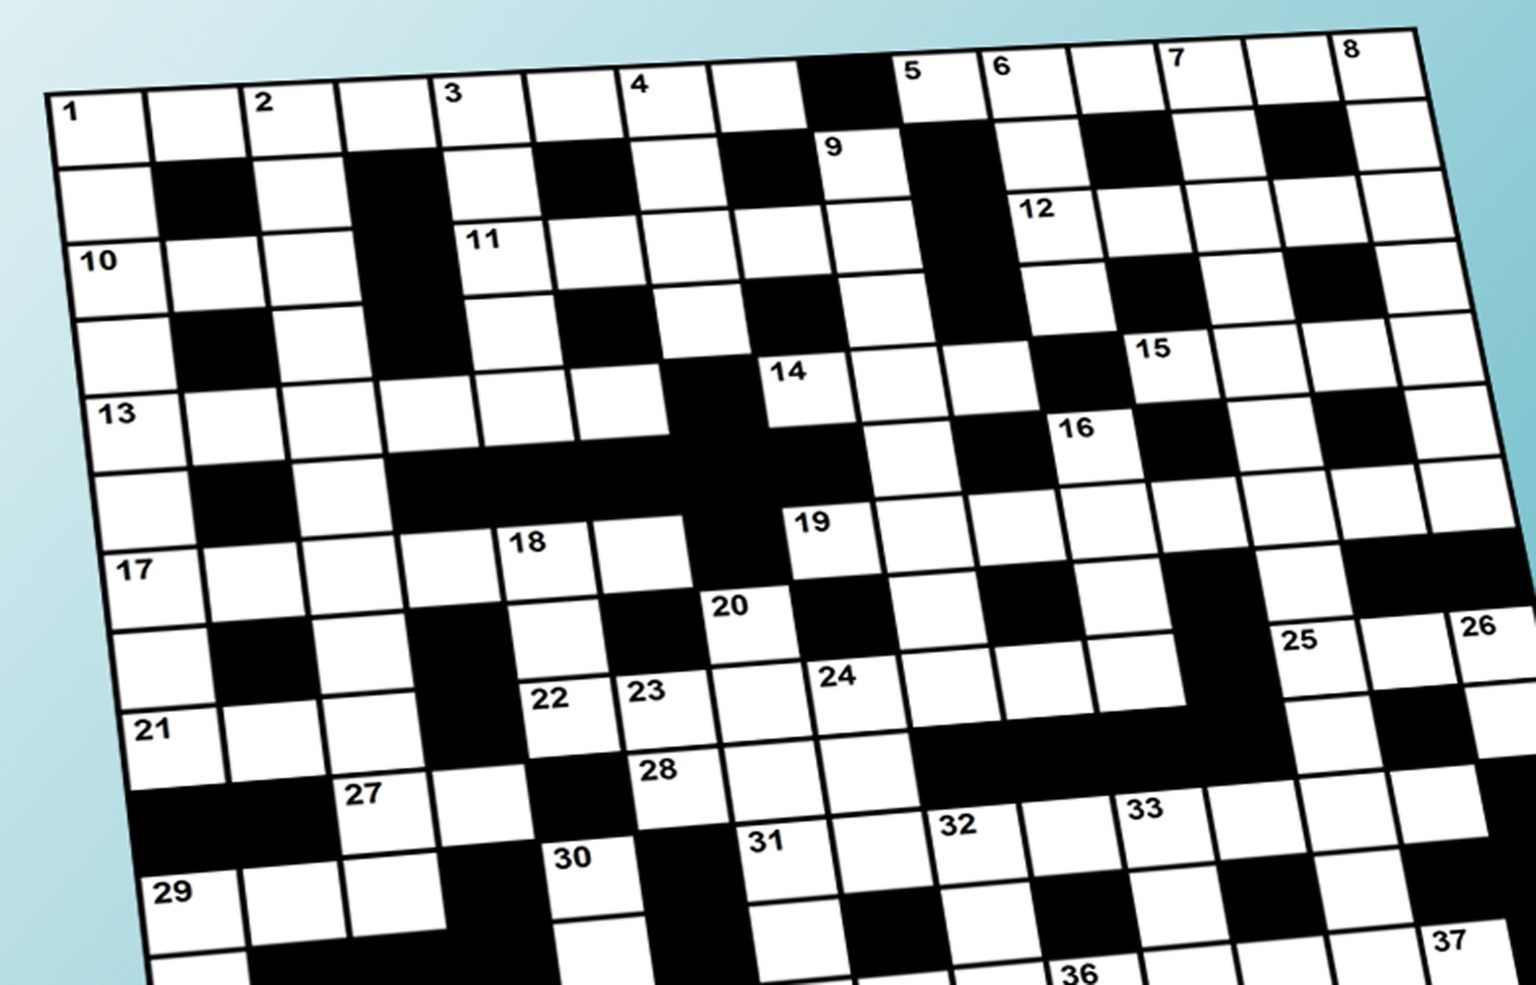 New York crossword. Ford crossword. Crossword time. Times crossword